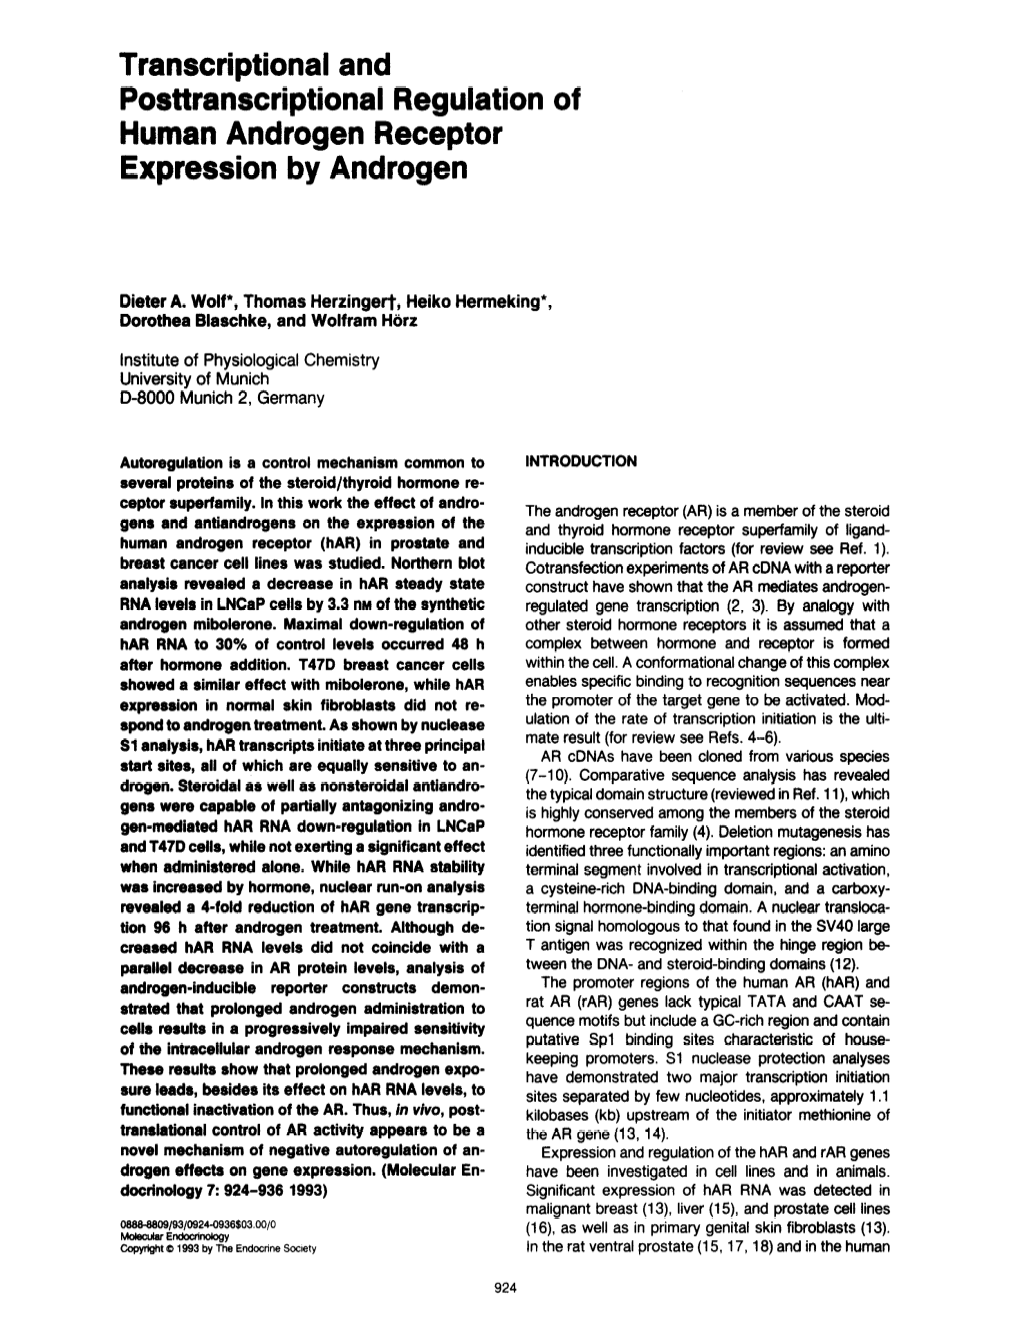 Transcriptional and Posttranscriptional Regulation of Human Androgen Receptor Expression by Androgen